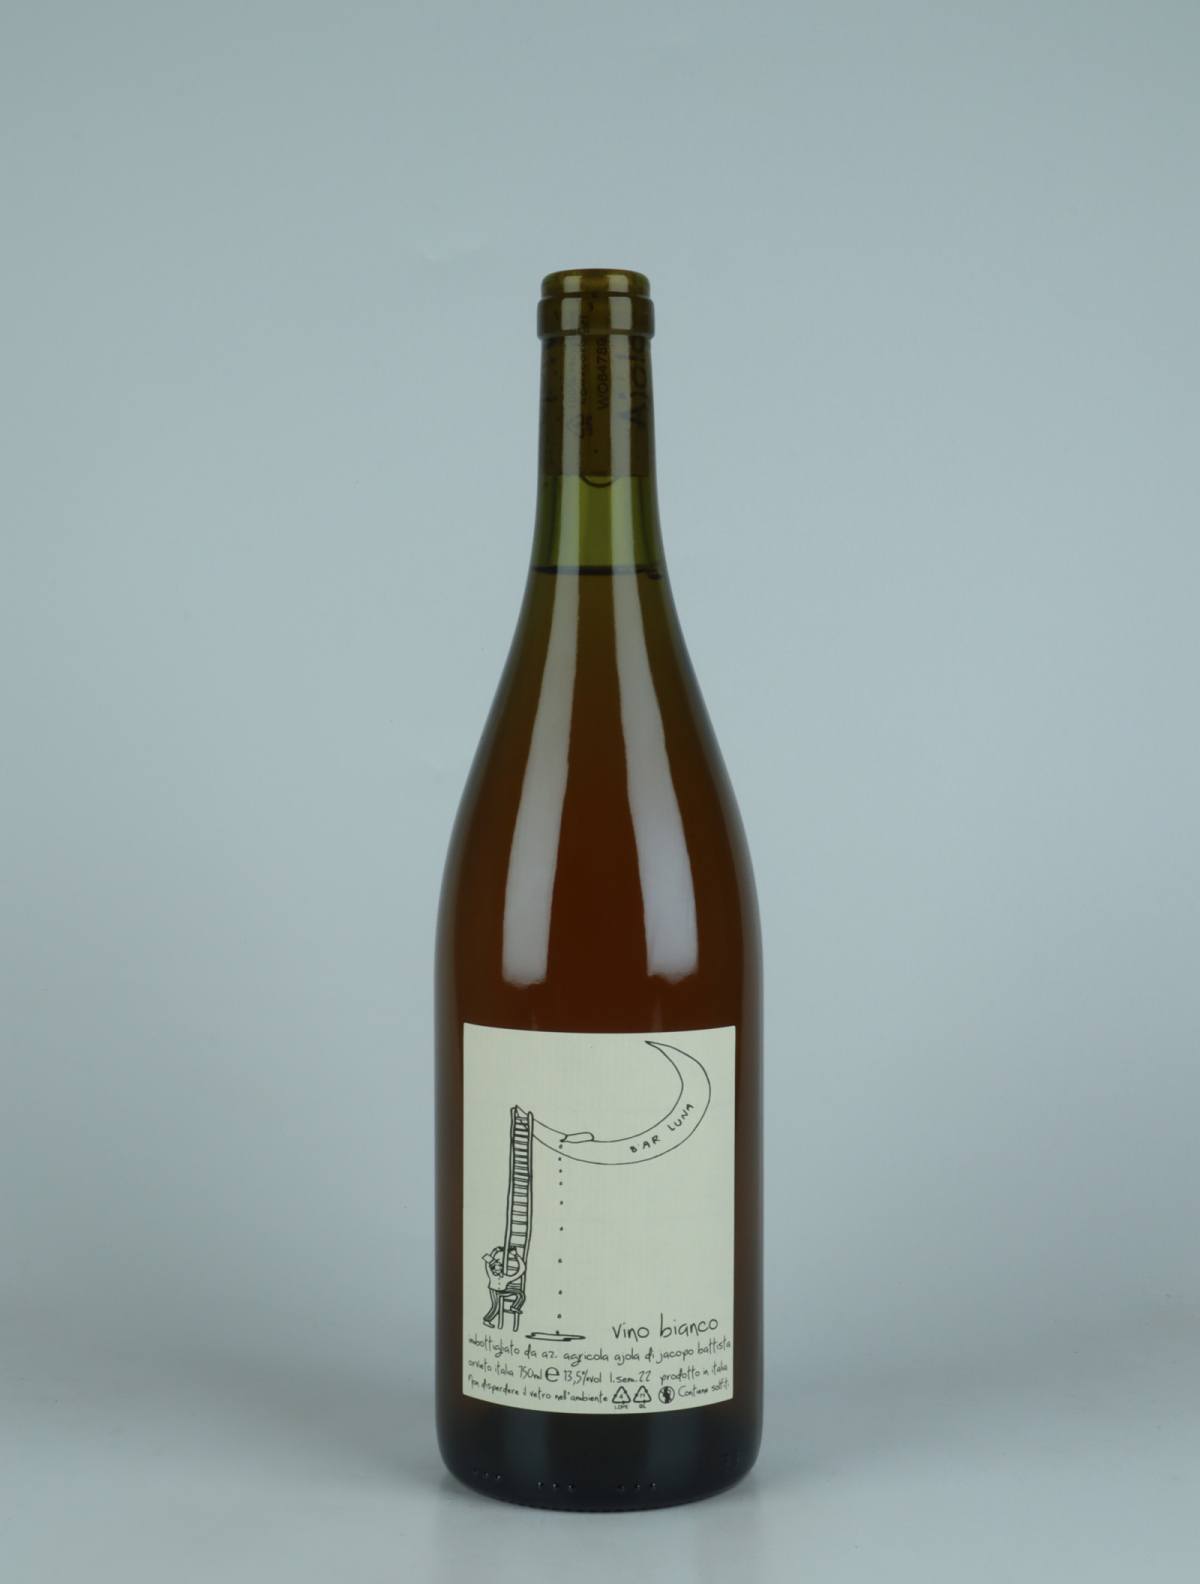 A bottle 2022 Vino Bianco Bar Luna Orange wine from Ajola, Umbria in Italy